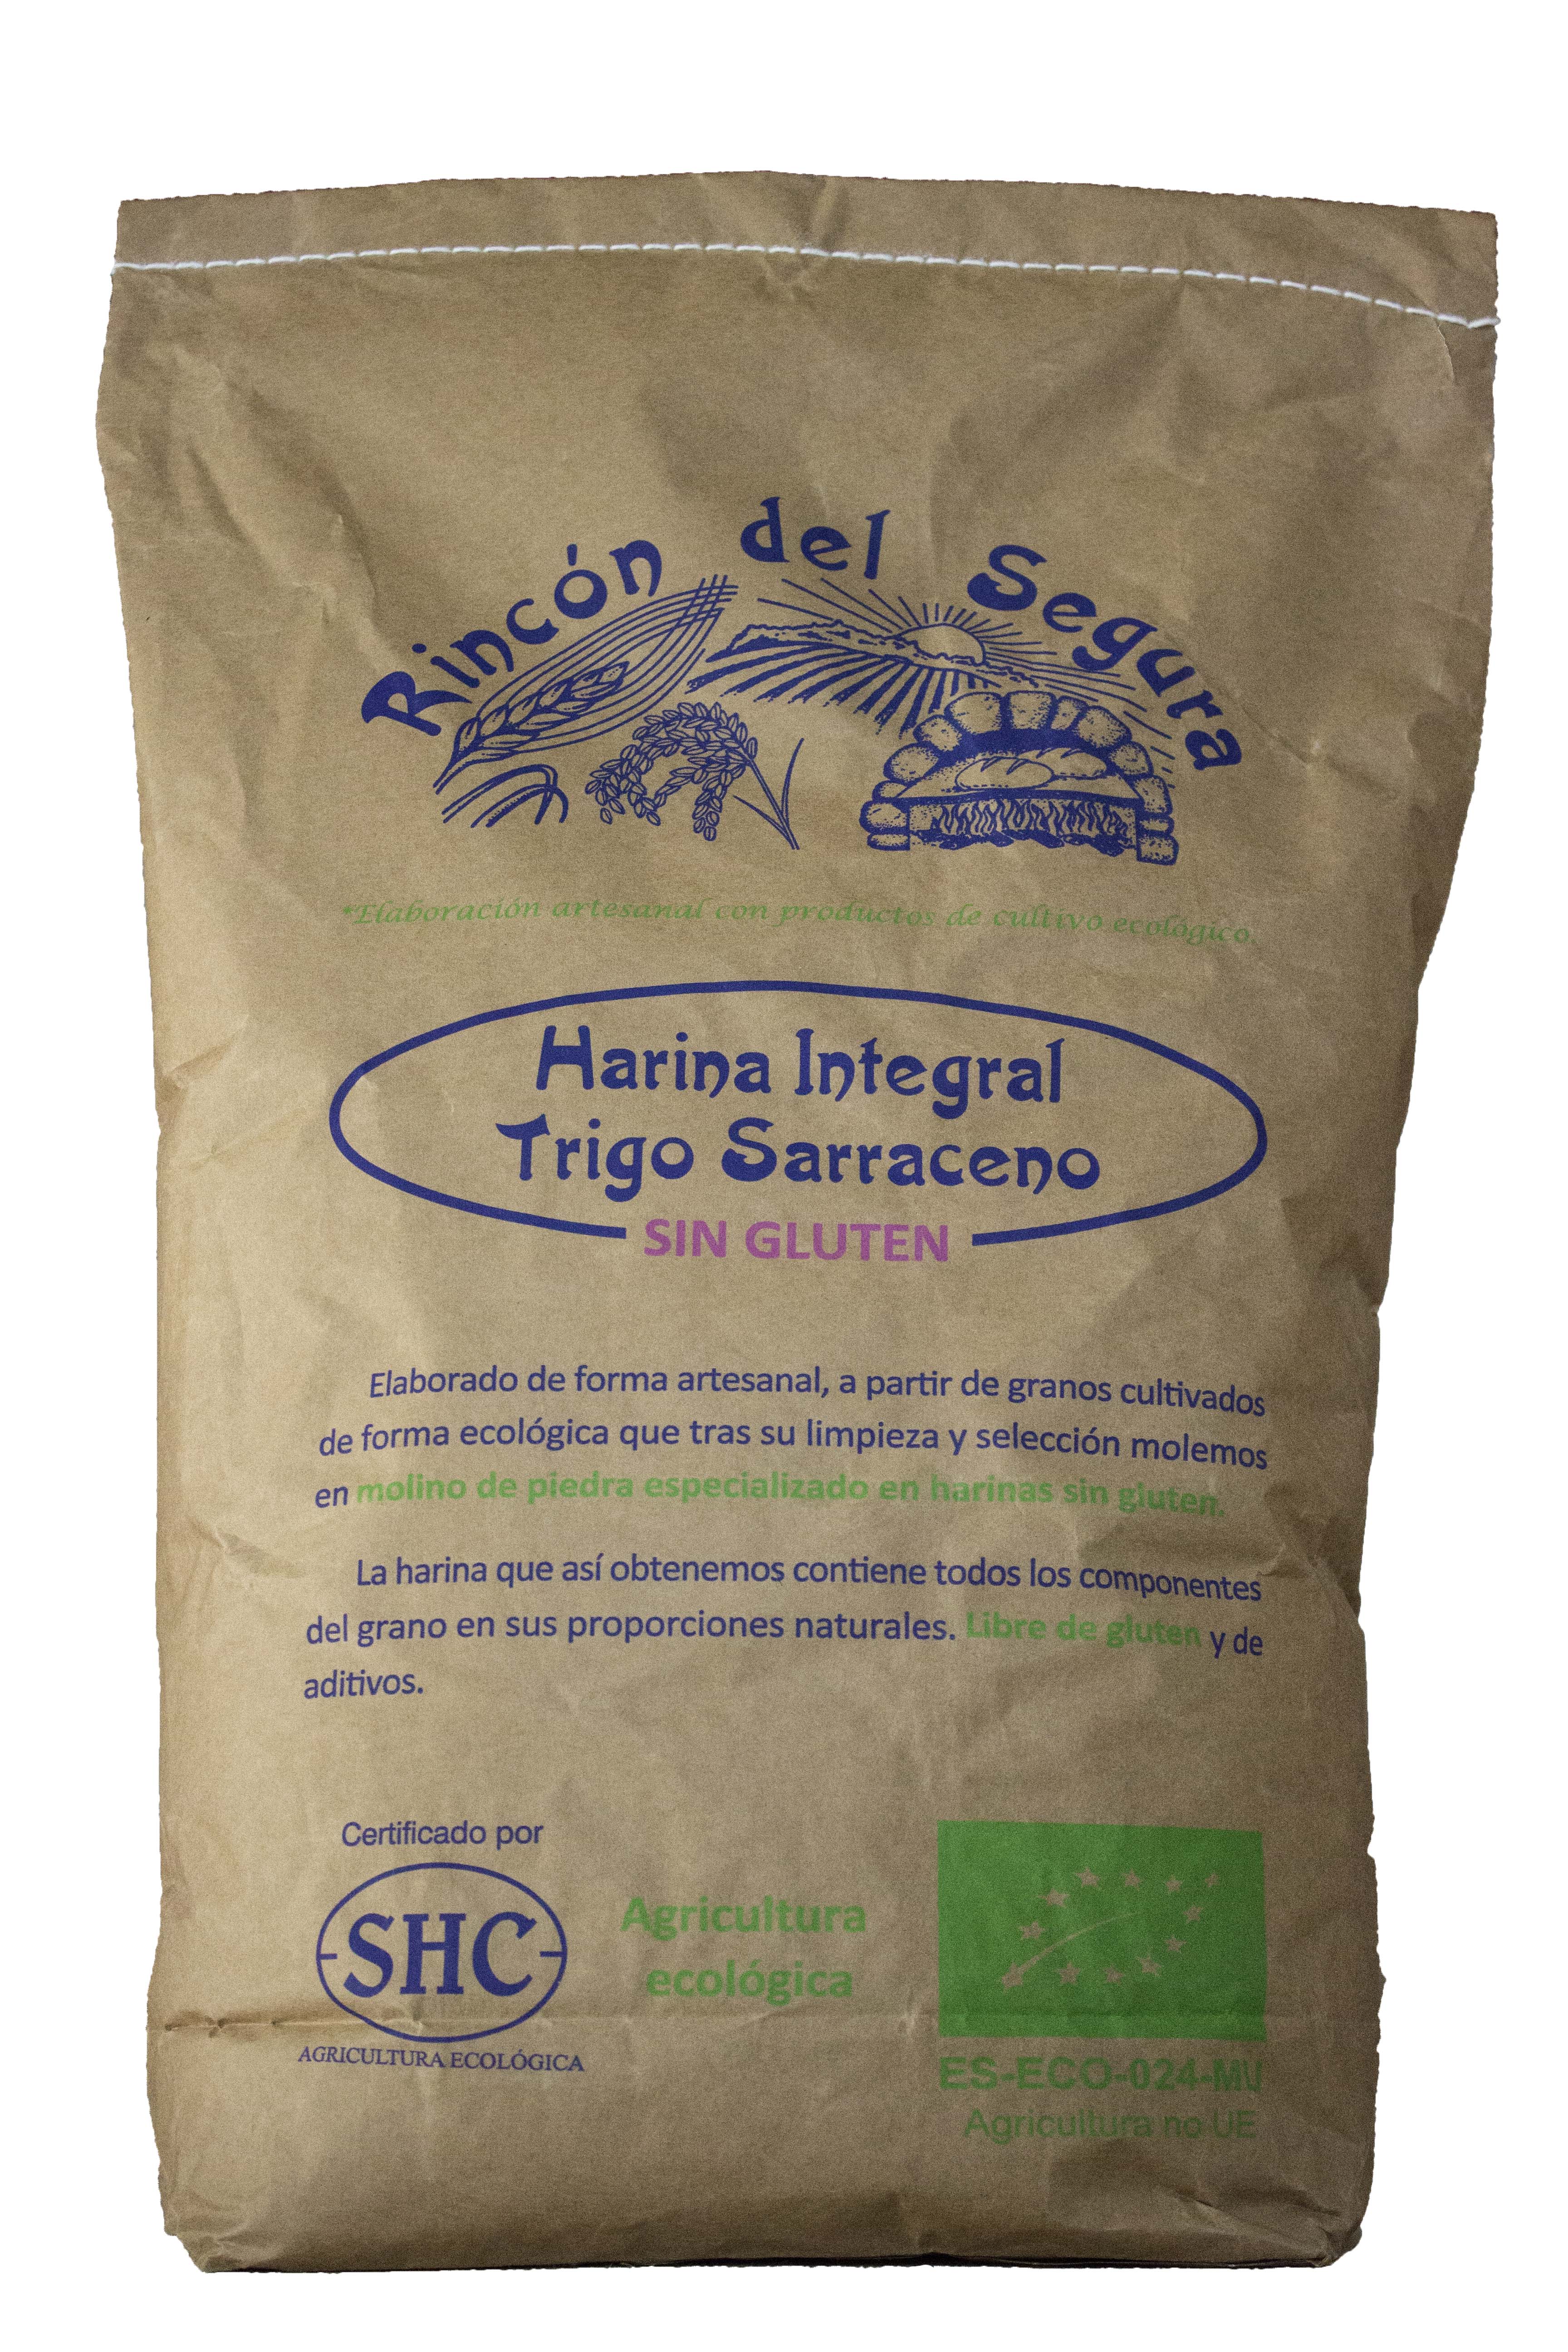 Harina Integral de Trigo Sarraceno SIN GLUTEN Bio 5 kg